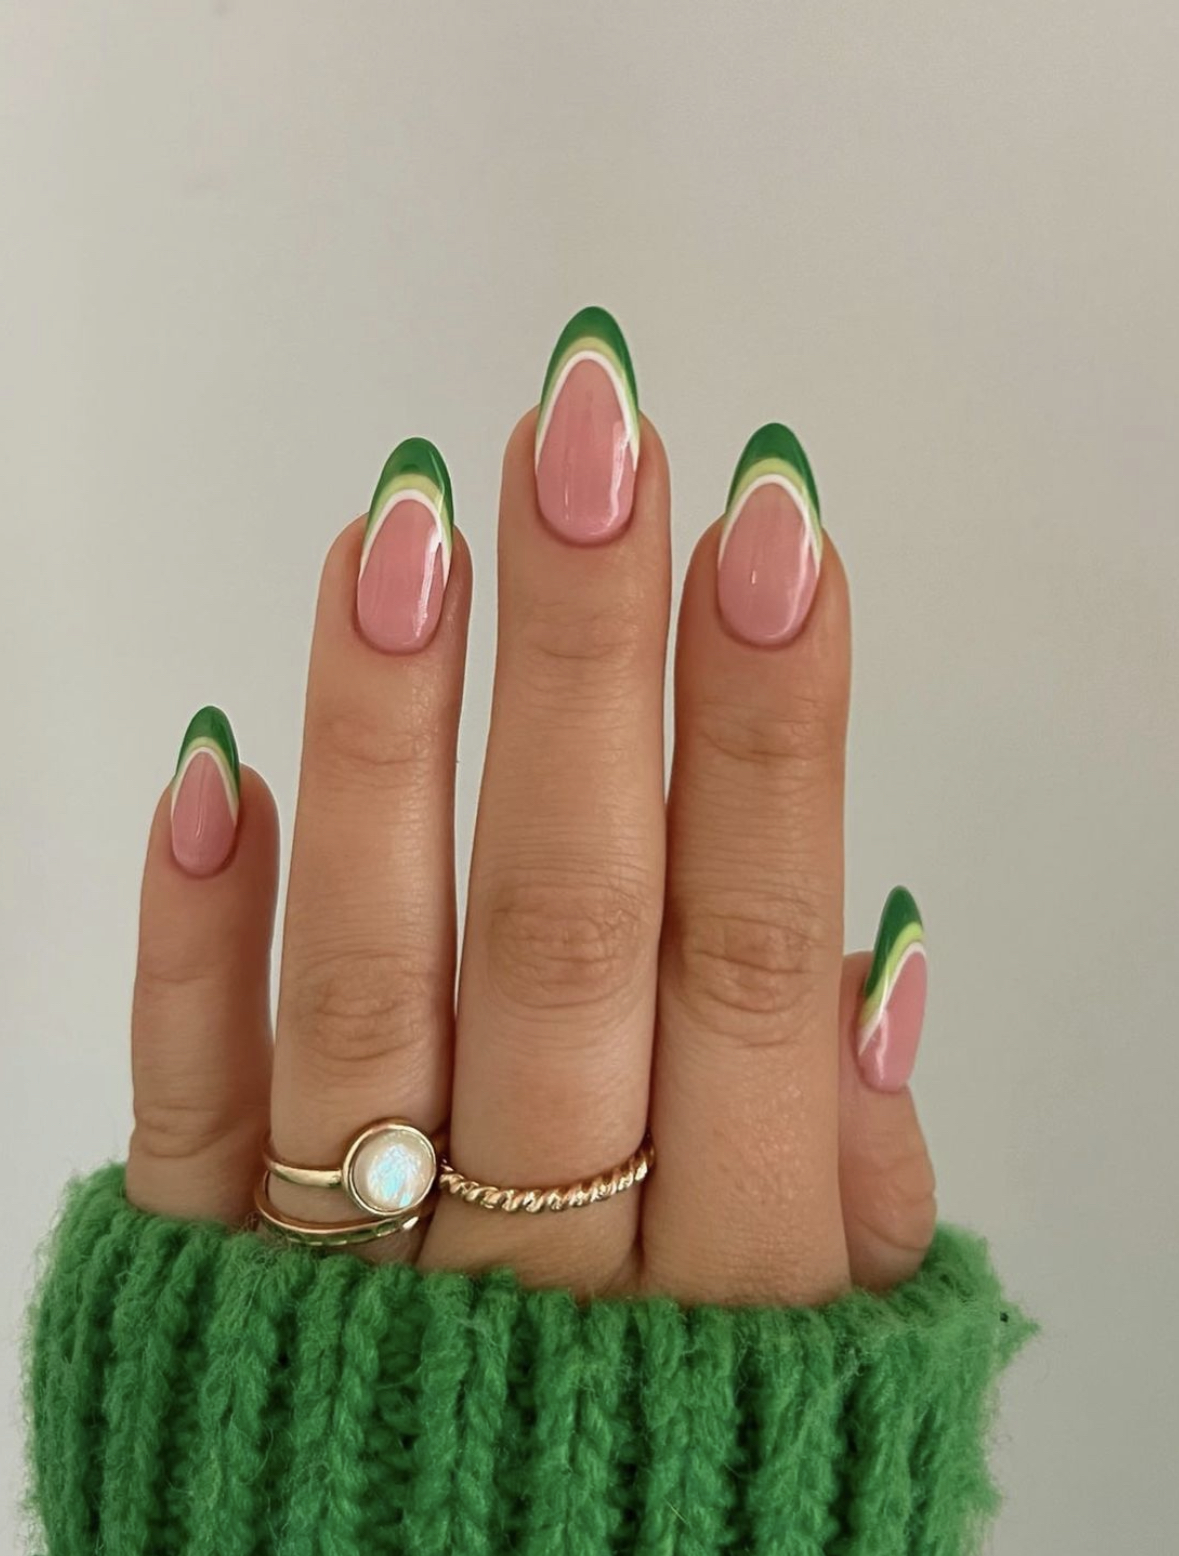 Best nail art design